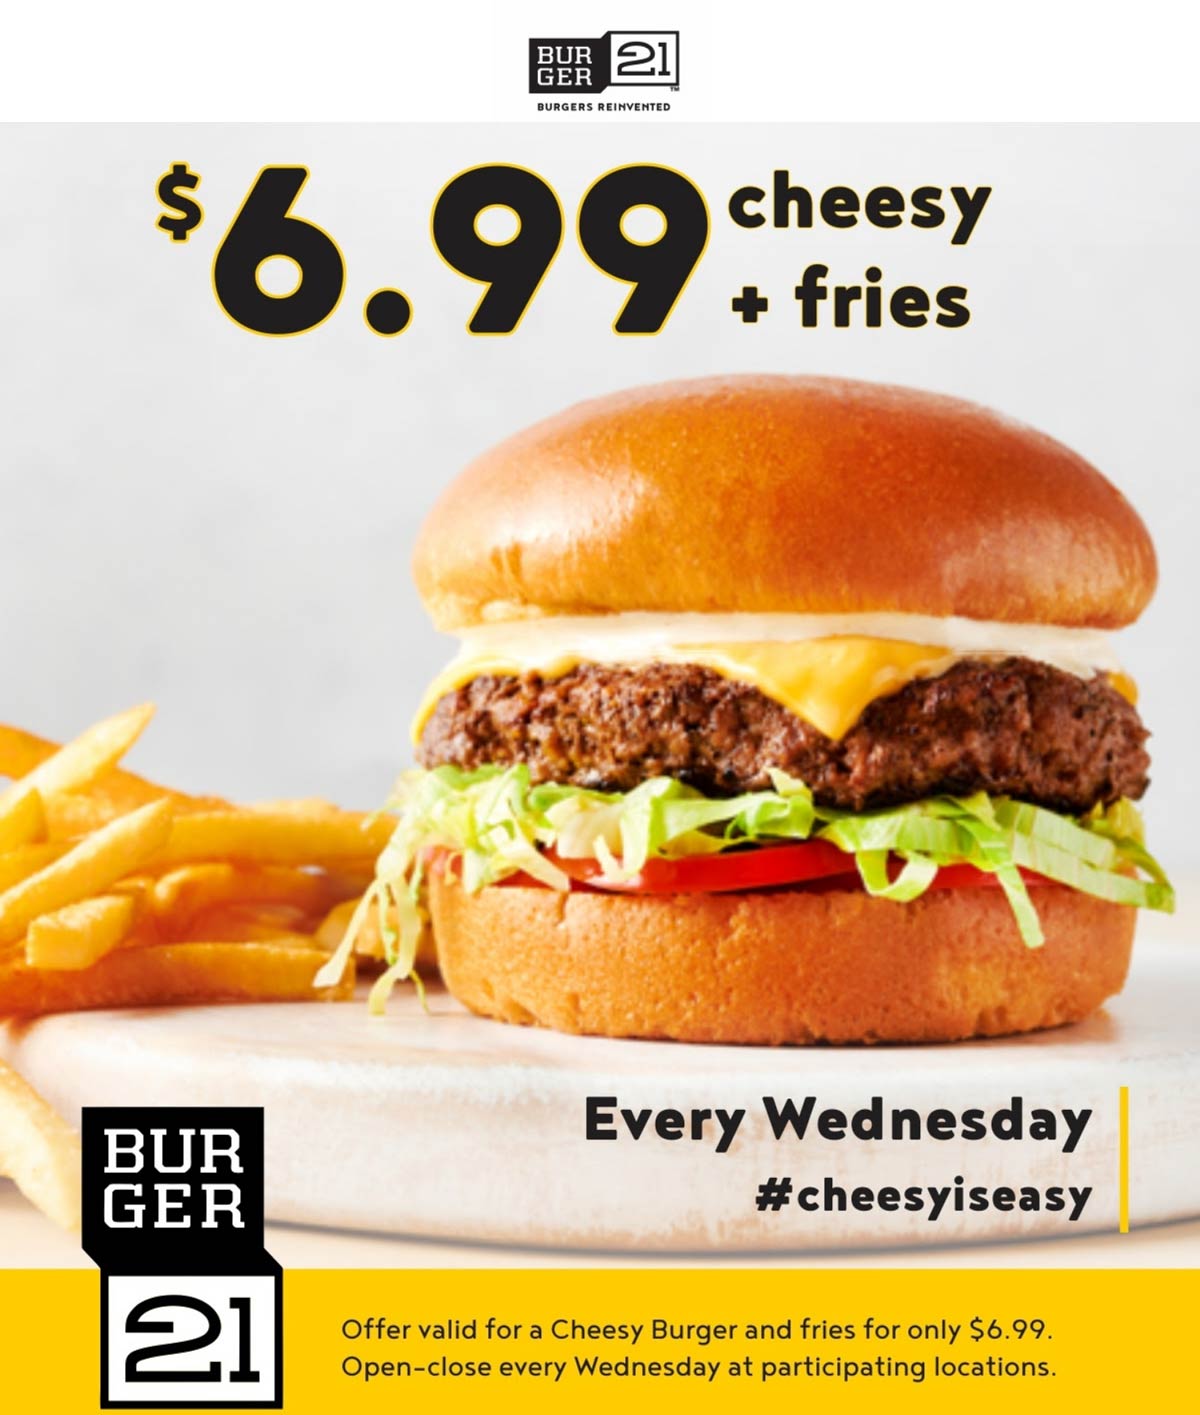 Burger 21 restaurants Coupon  Cheeseburger + fries = $7 today at Burger 21 #burger21 